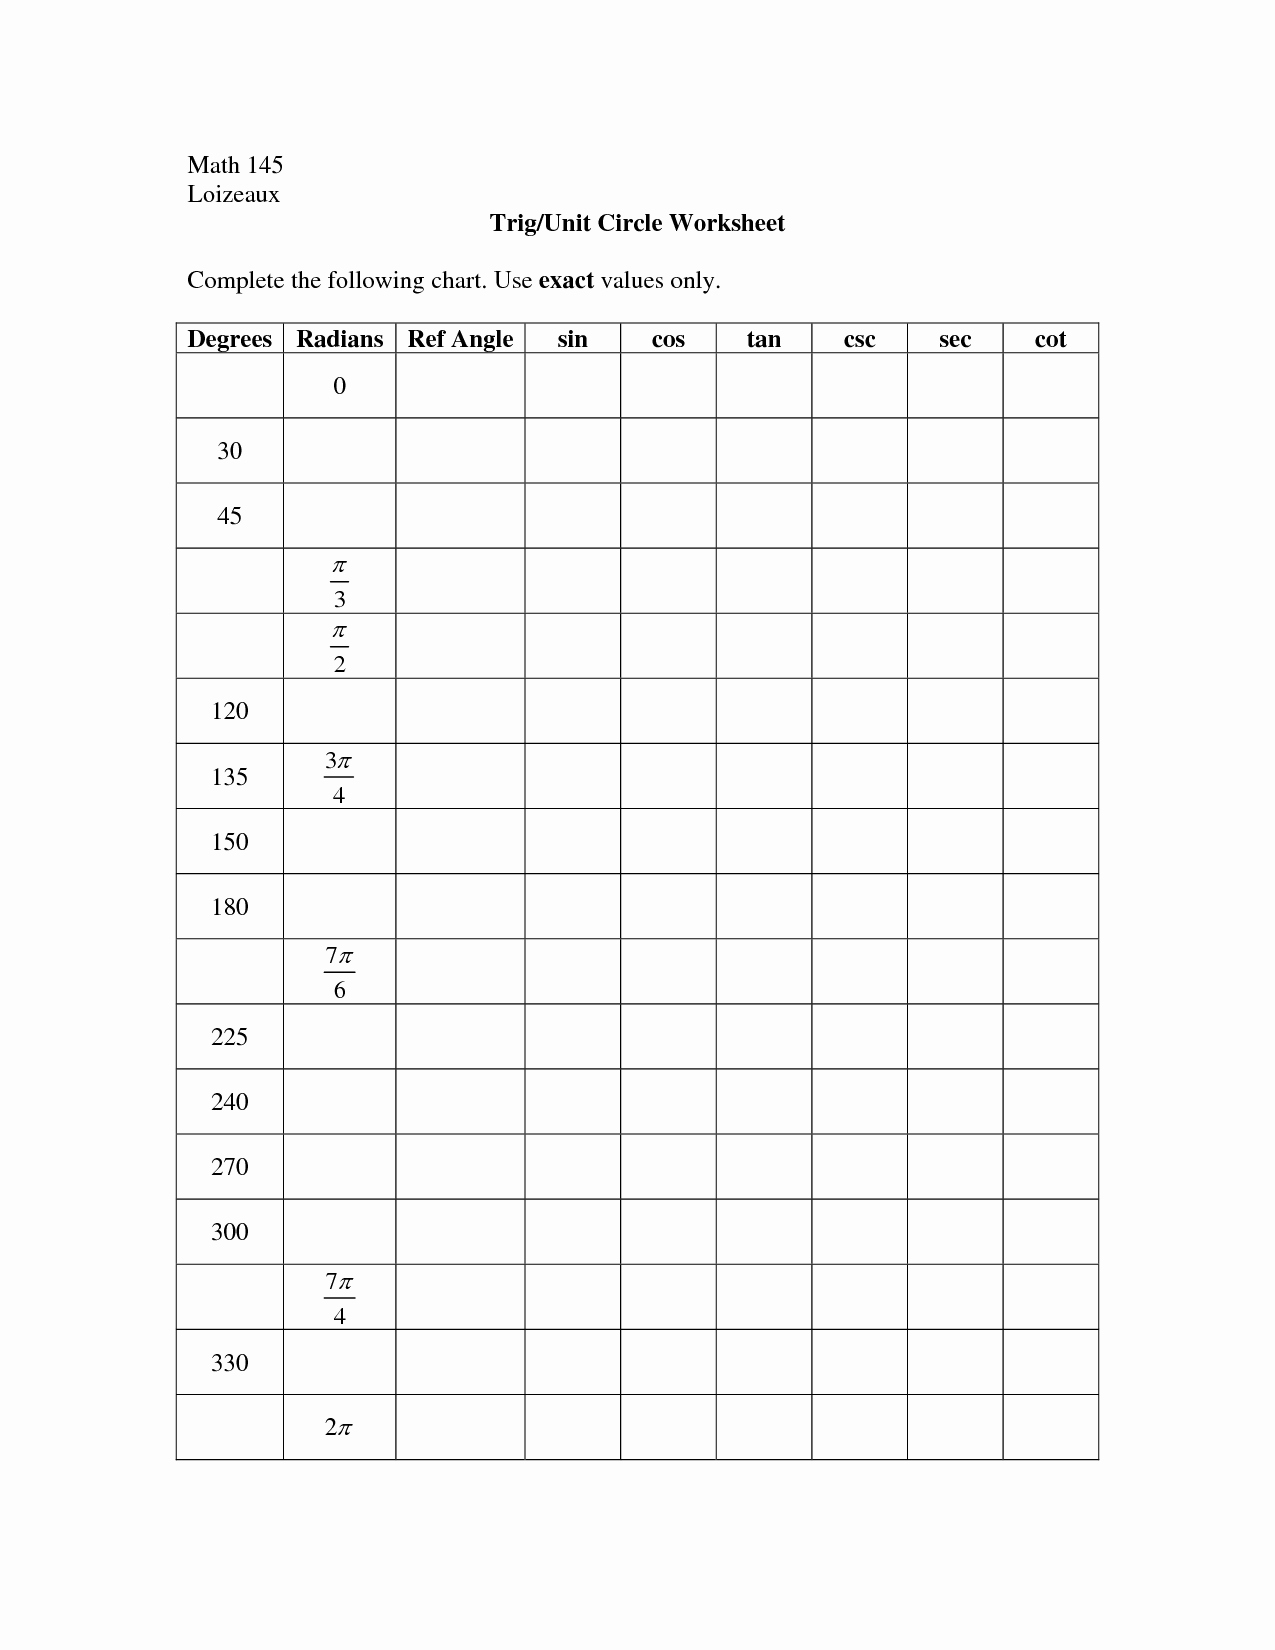 Trigonometry Unit Circle Worksheet Answers Luxury 17 Best Of Blank Personal Values Worksheet Trig